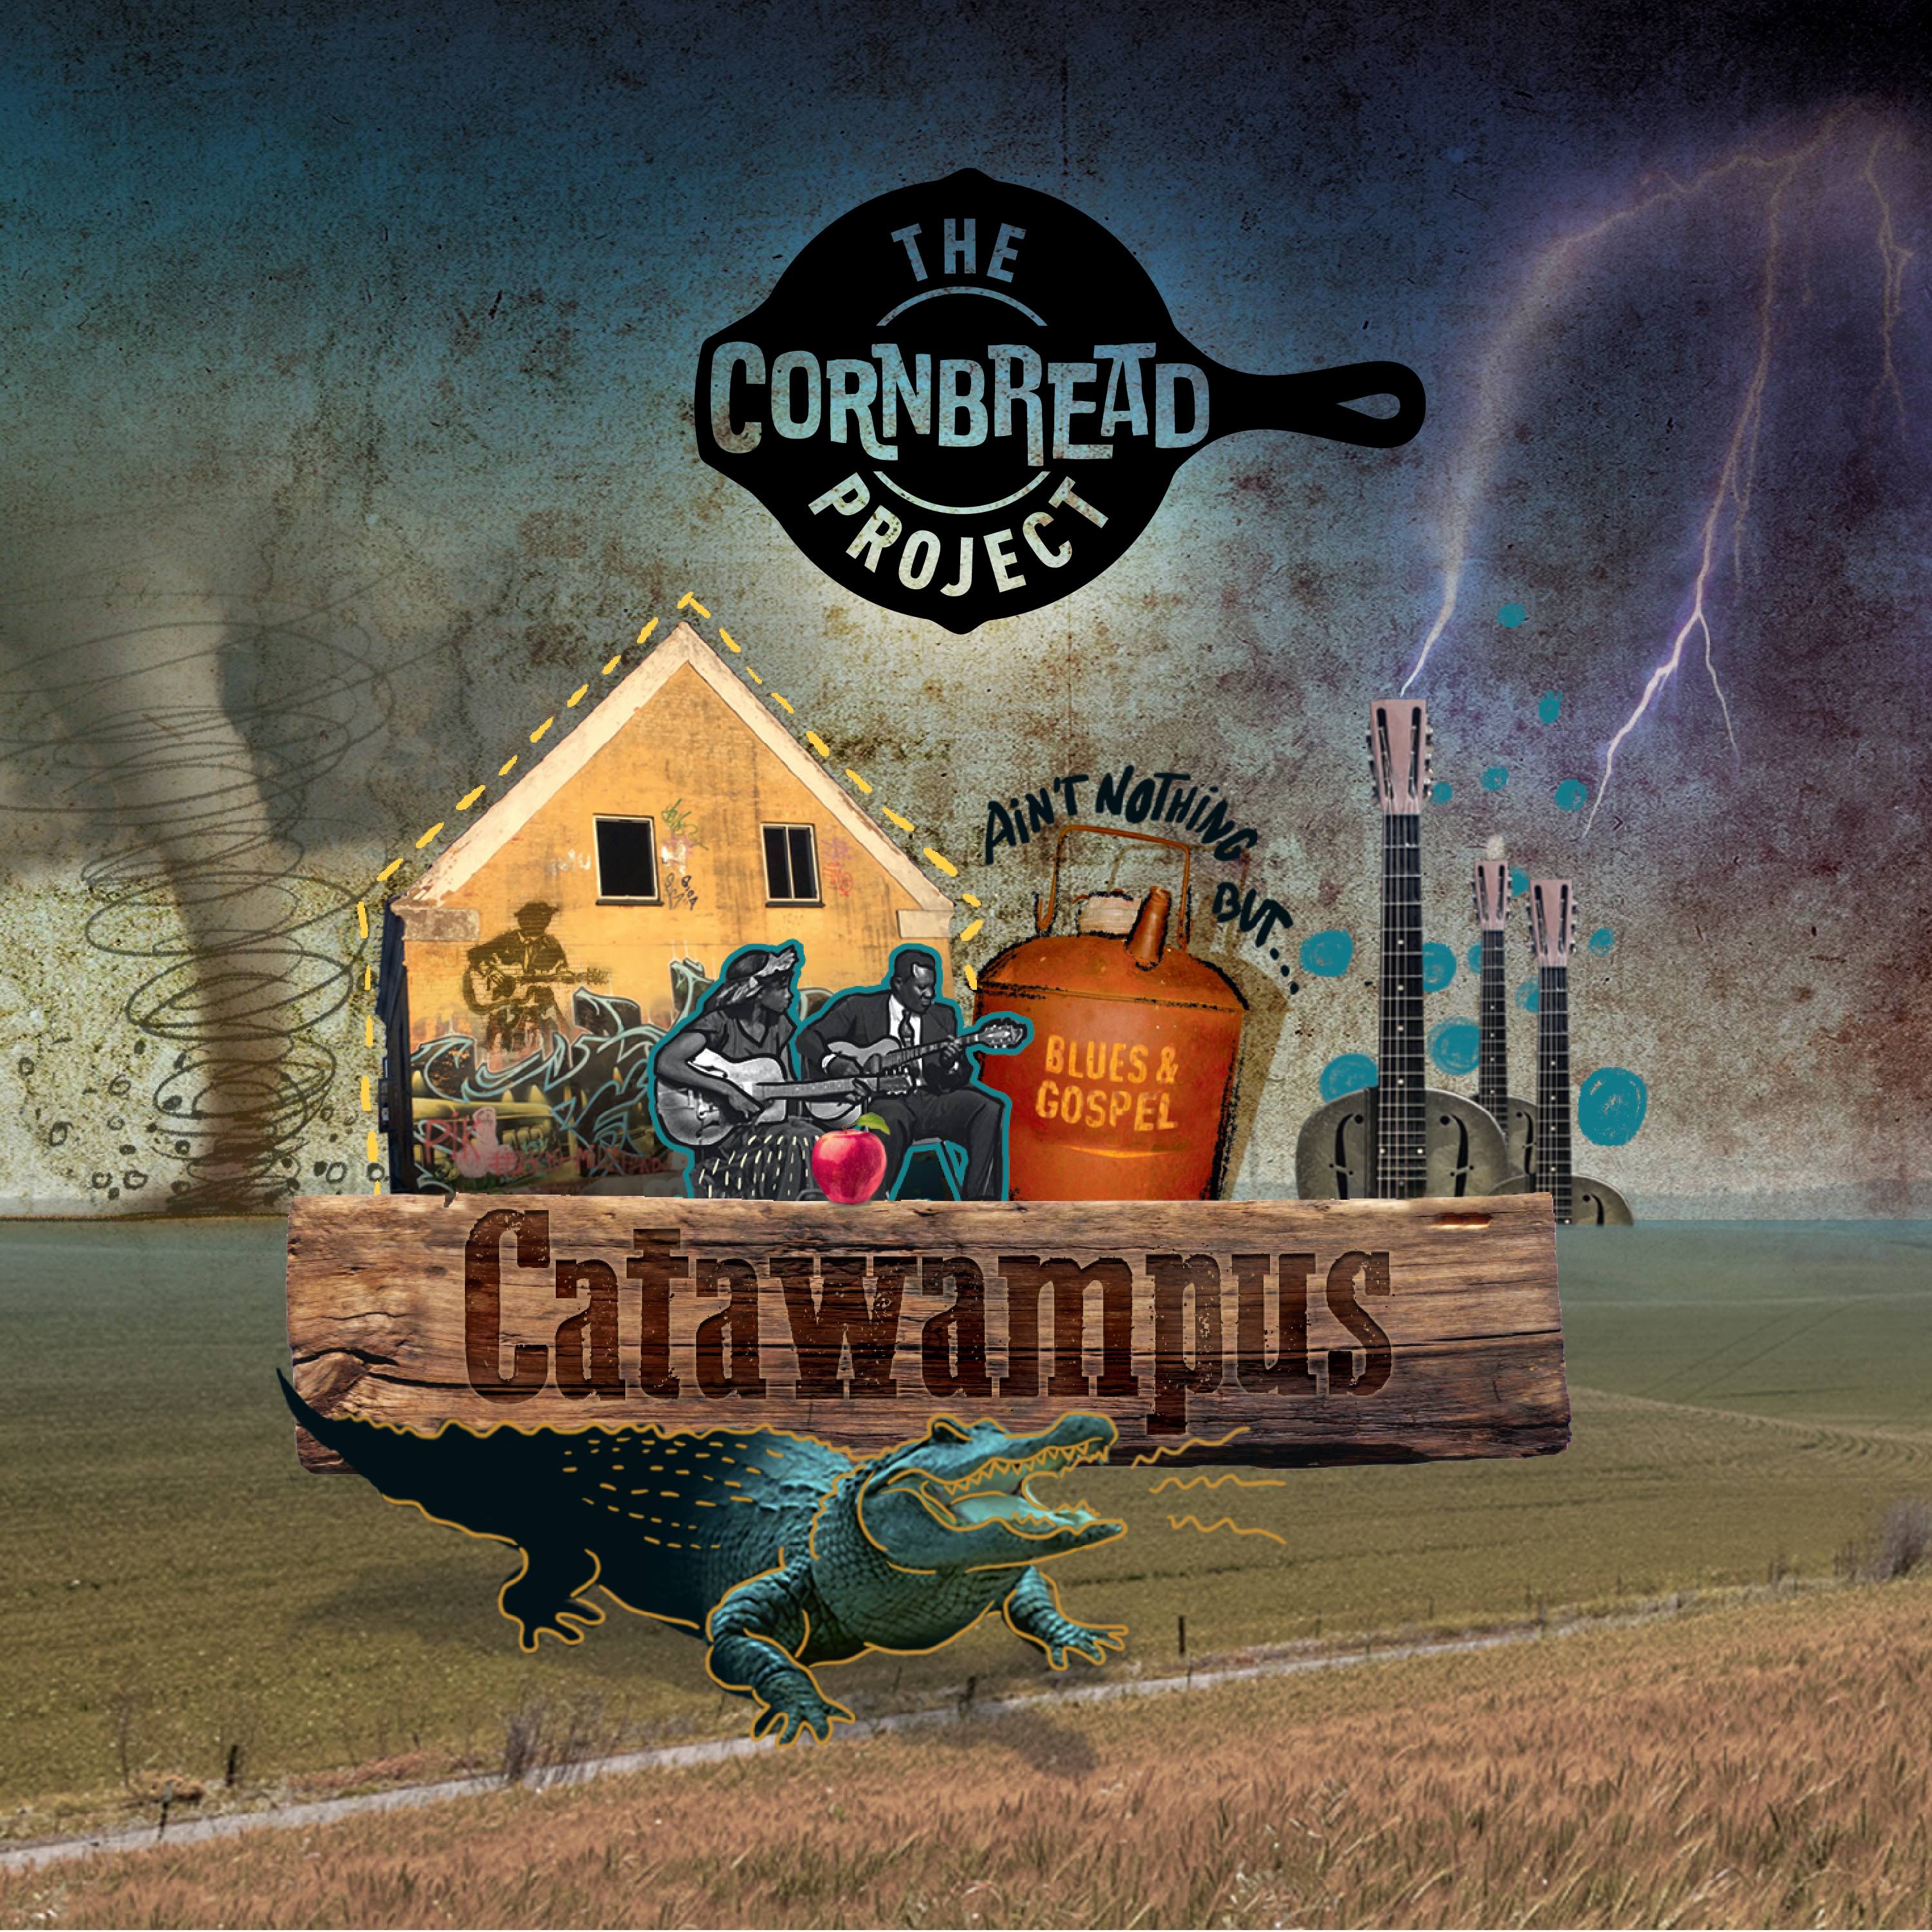 Cornbread Blues Project
Catawampus